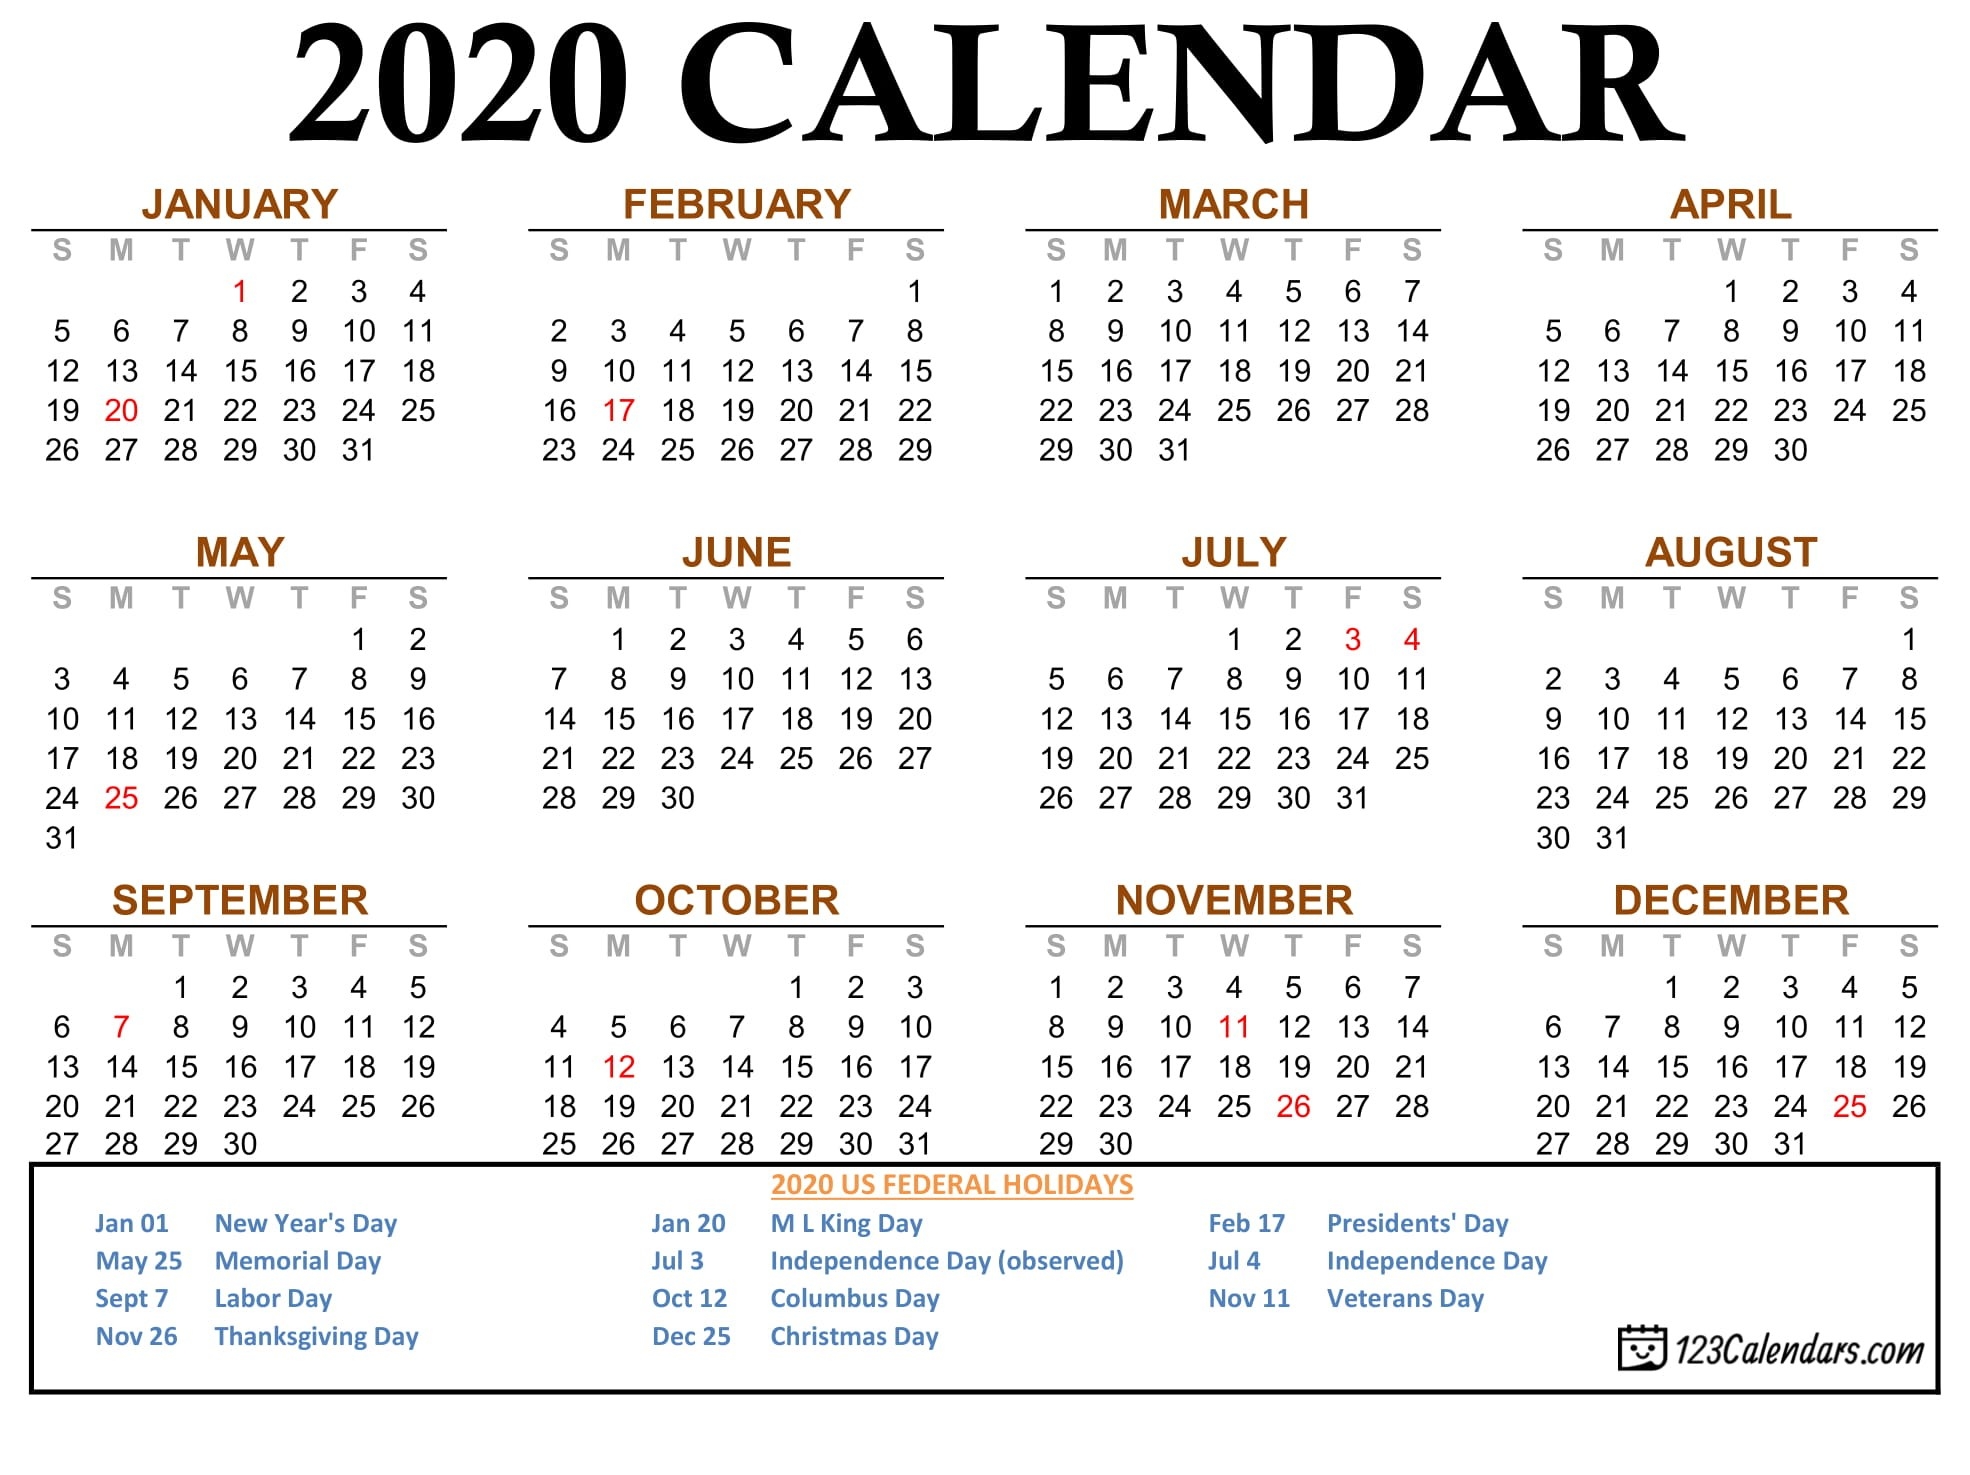 Free Printable 2020 Calendar | 123Calendars  Printable Checkbook Size Calendar